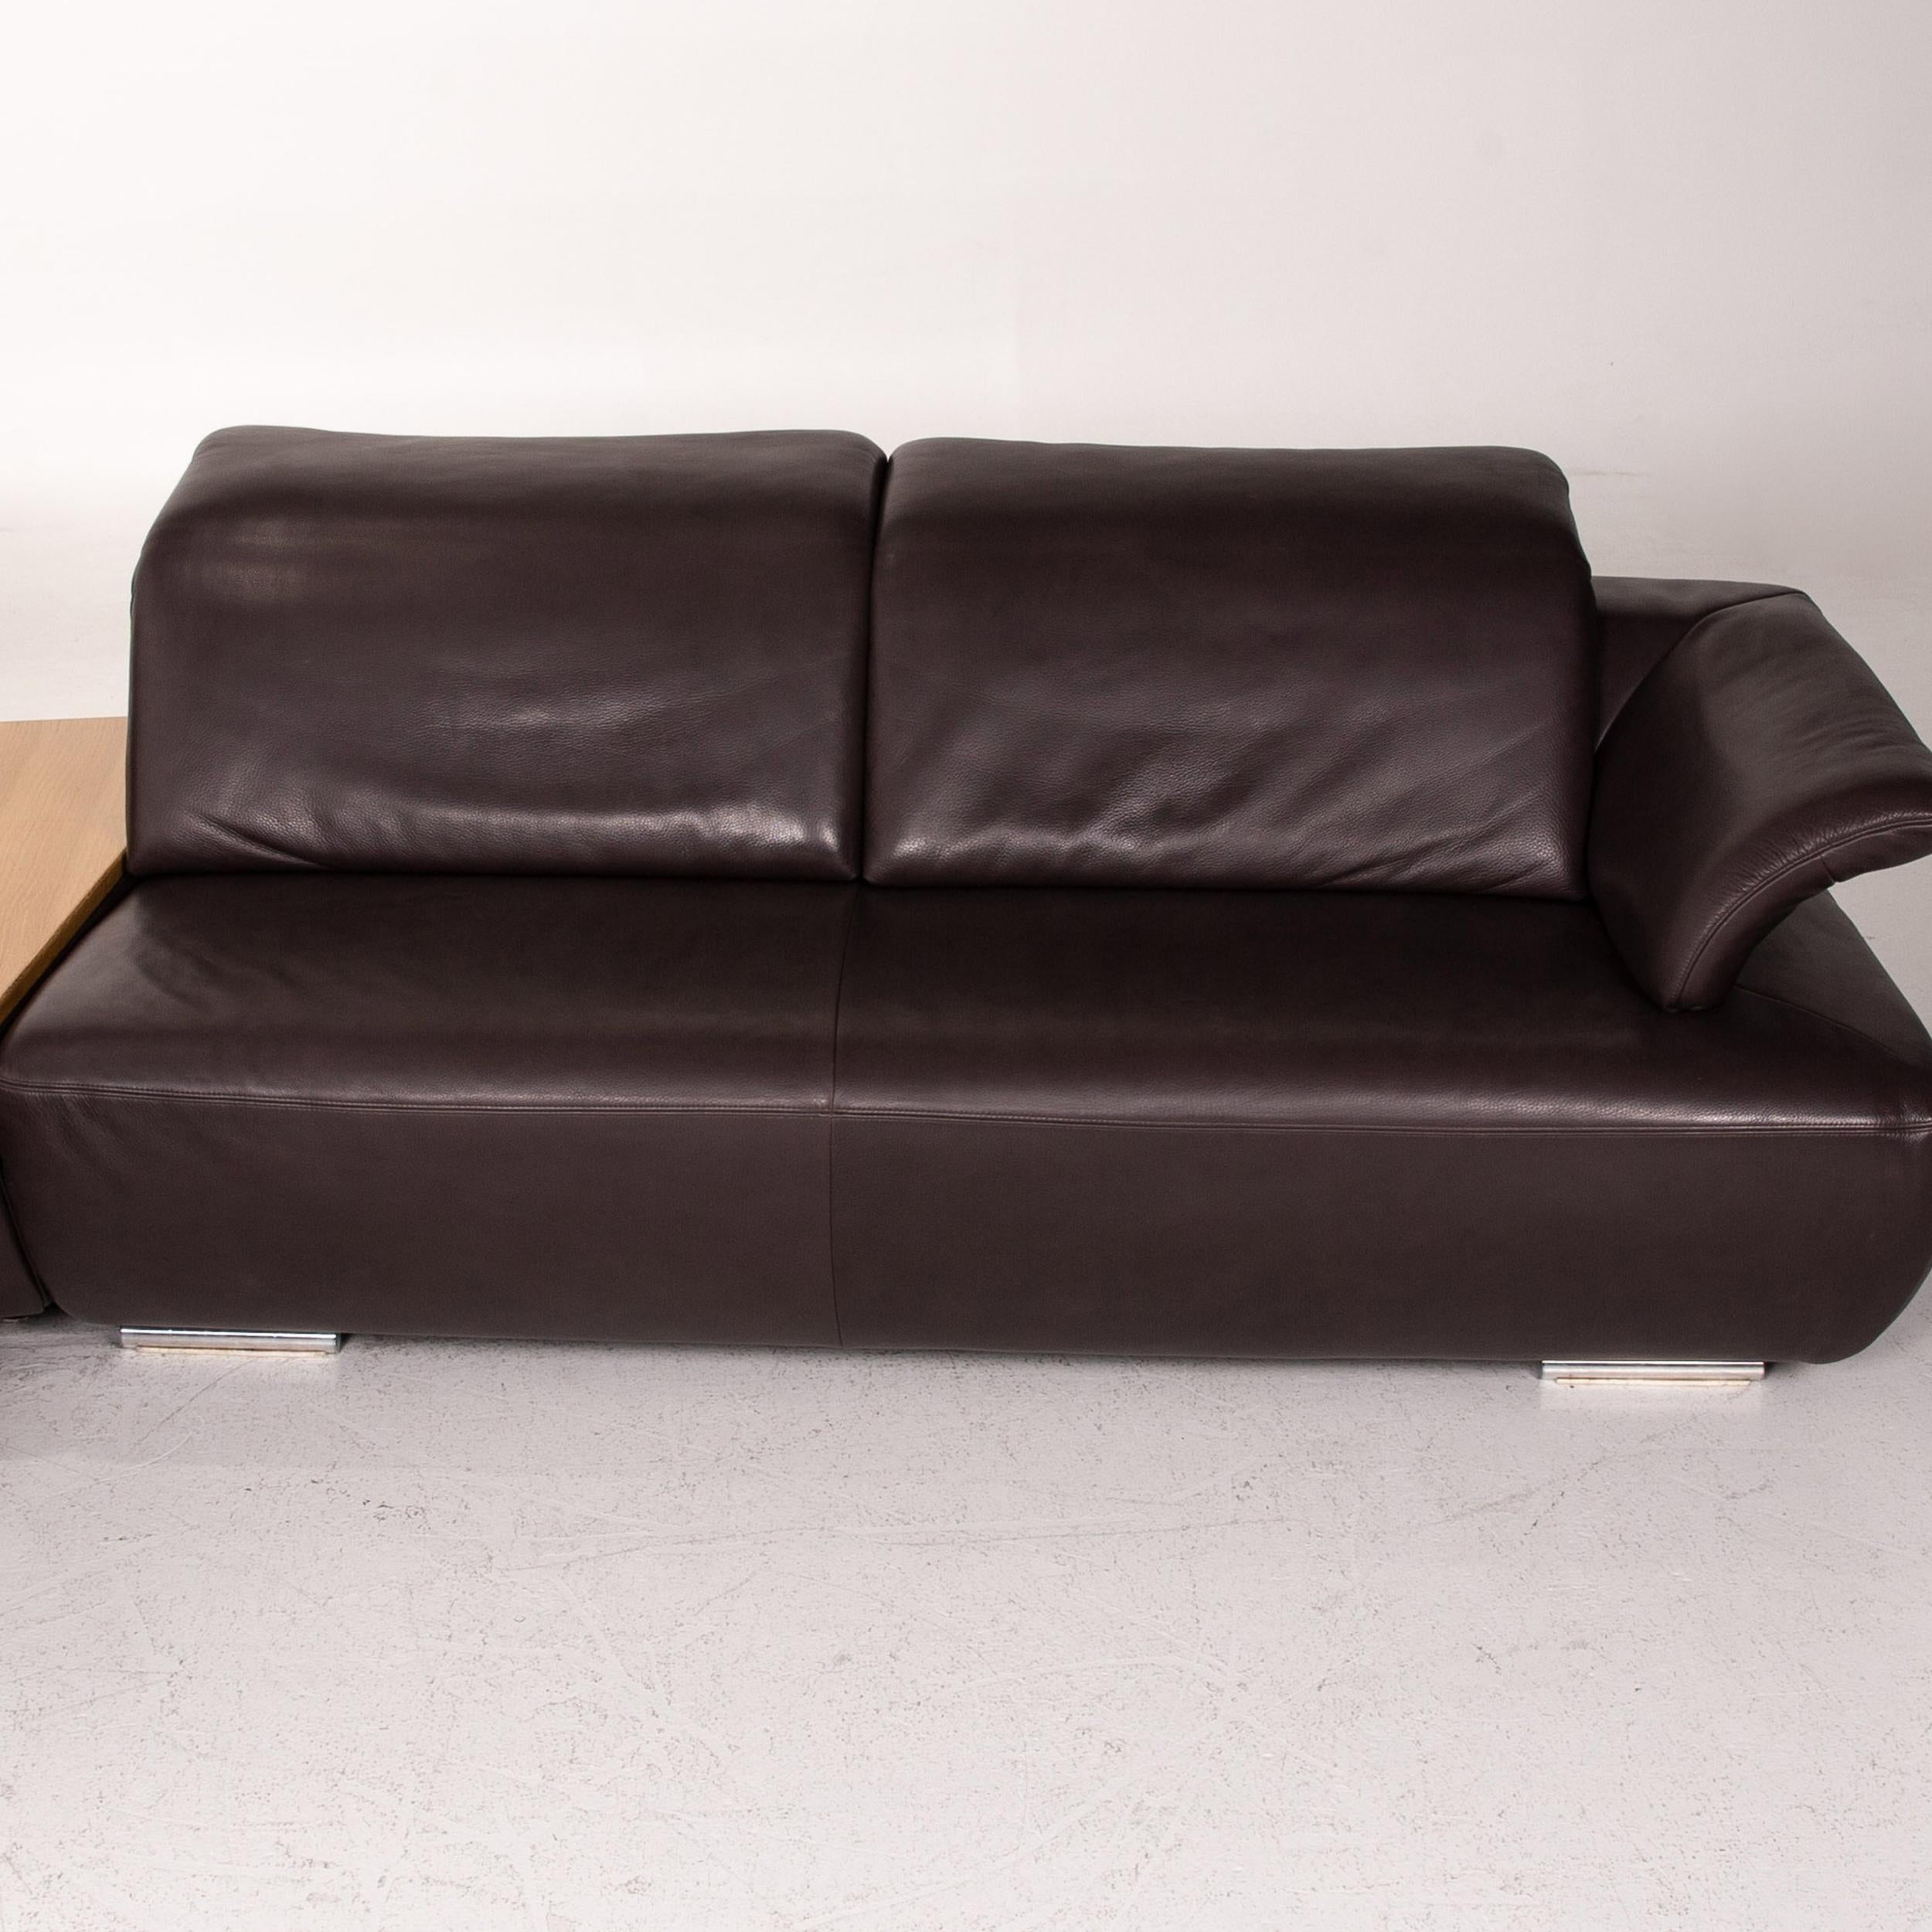 Koinor Avanti Leather Corner Sofa Brown Dark Brown Wood Function Sofa Couch For Sale 2